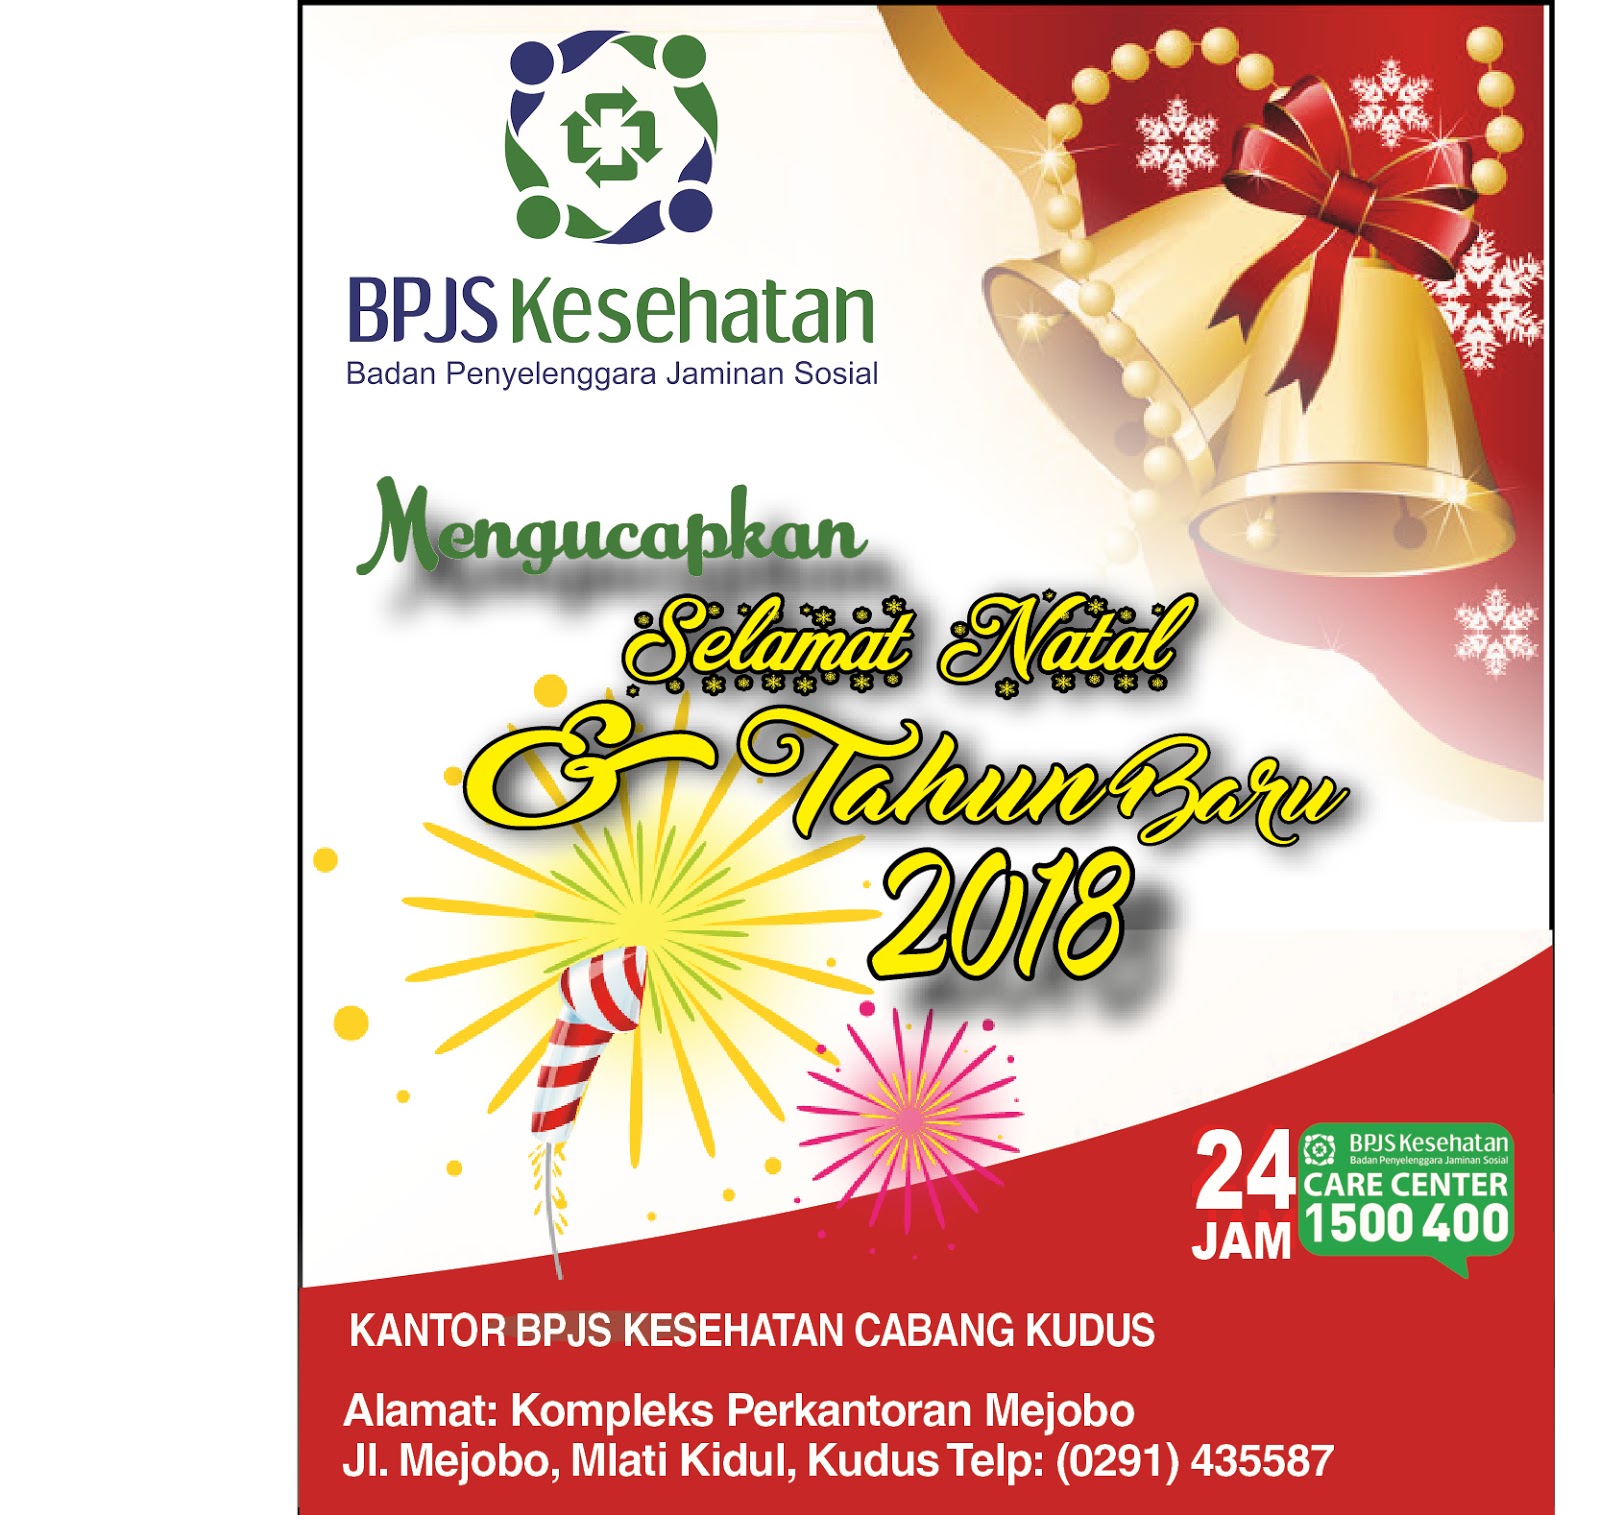 BPJS Kesehatan Kudus Mengucapkan Selamat Tahun Baru Java Jawa